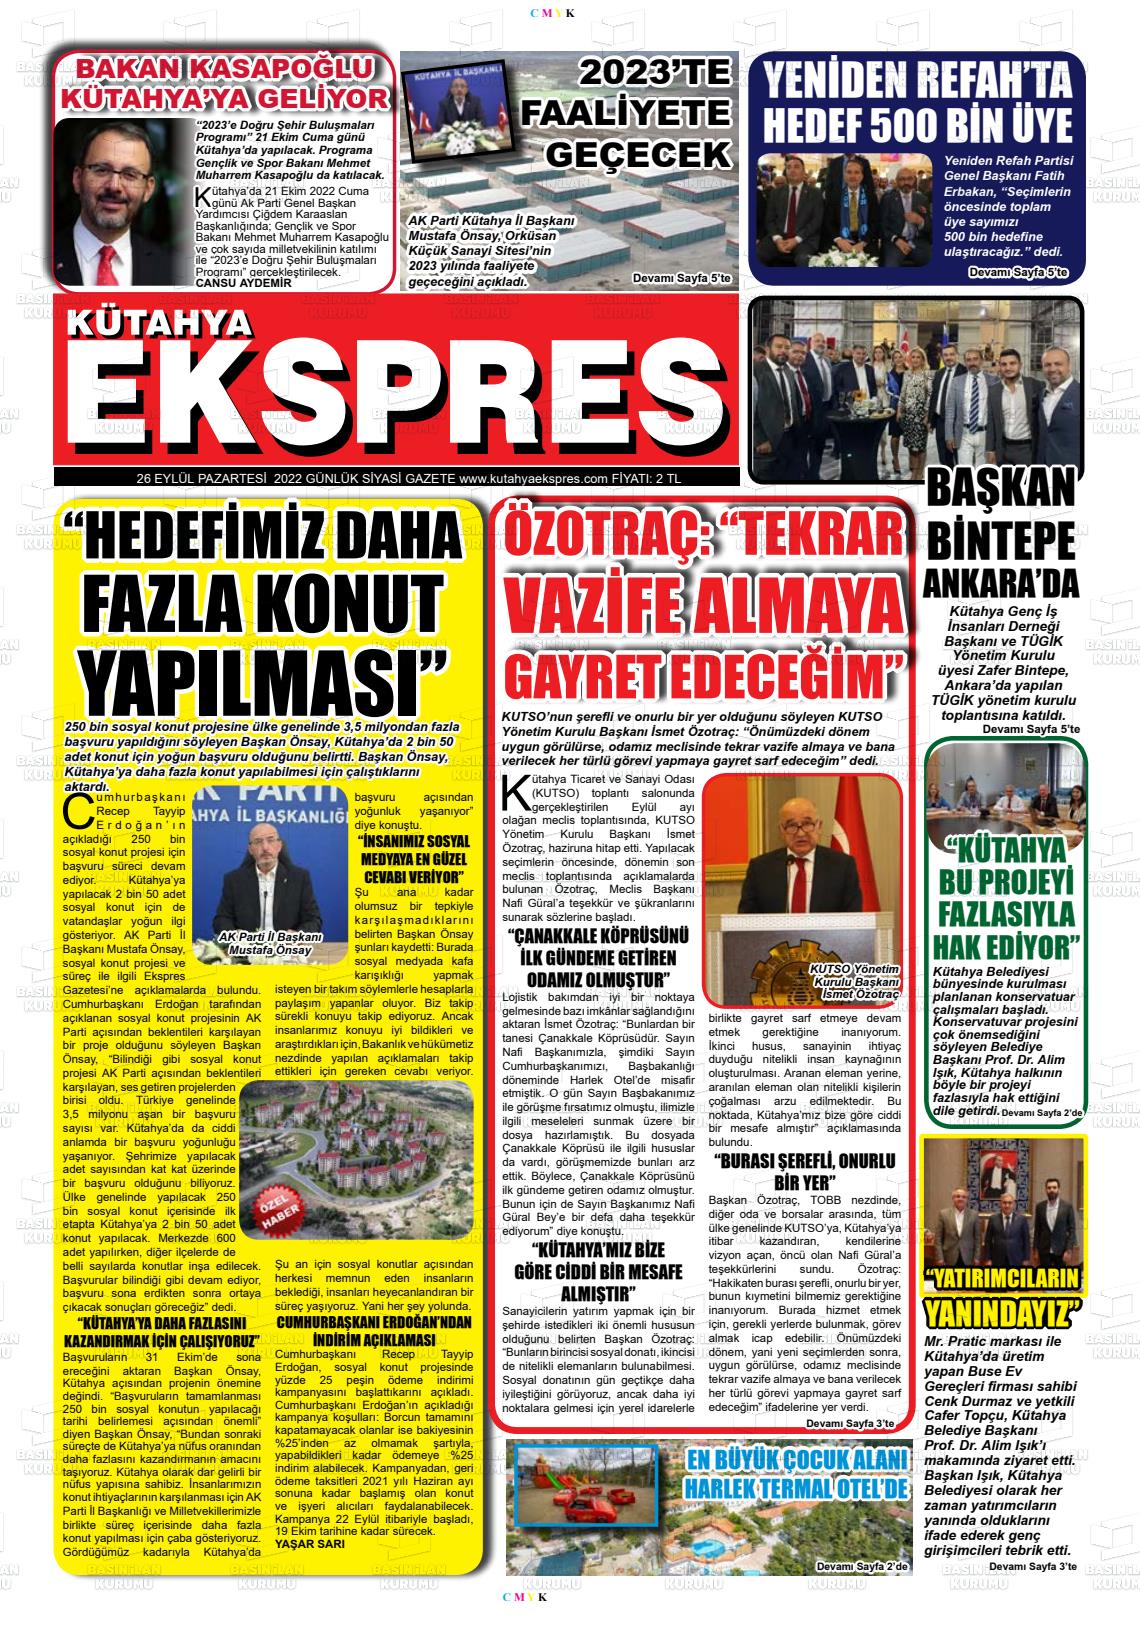 26 Eylül 2022 Kütahya Ekspres Gazete Manşeti